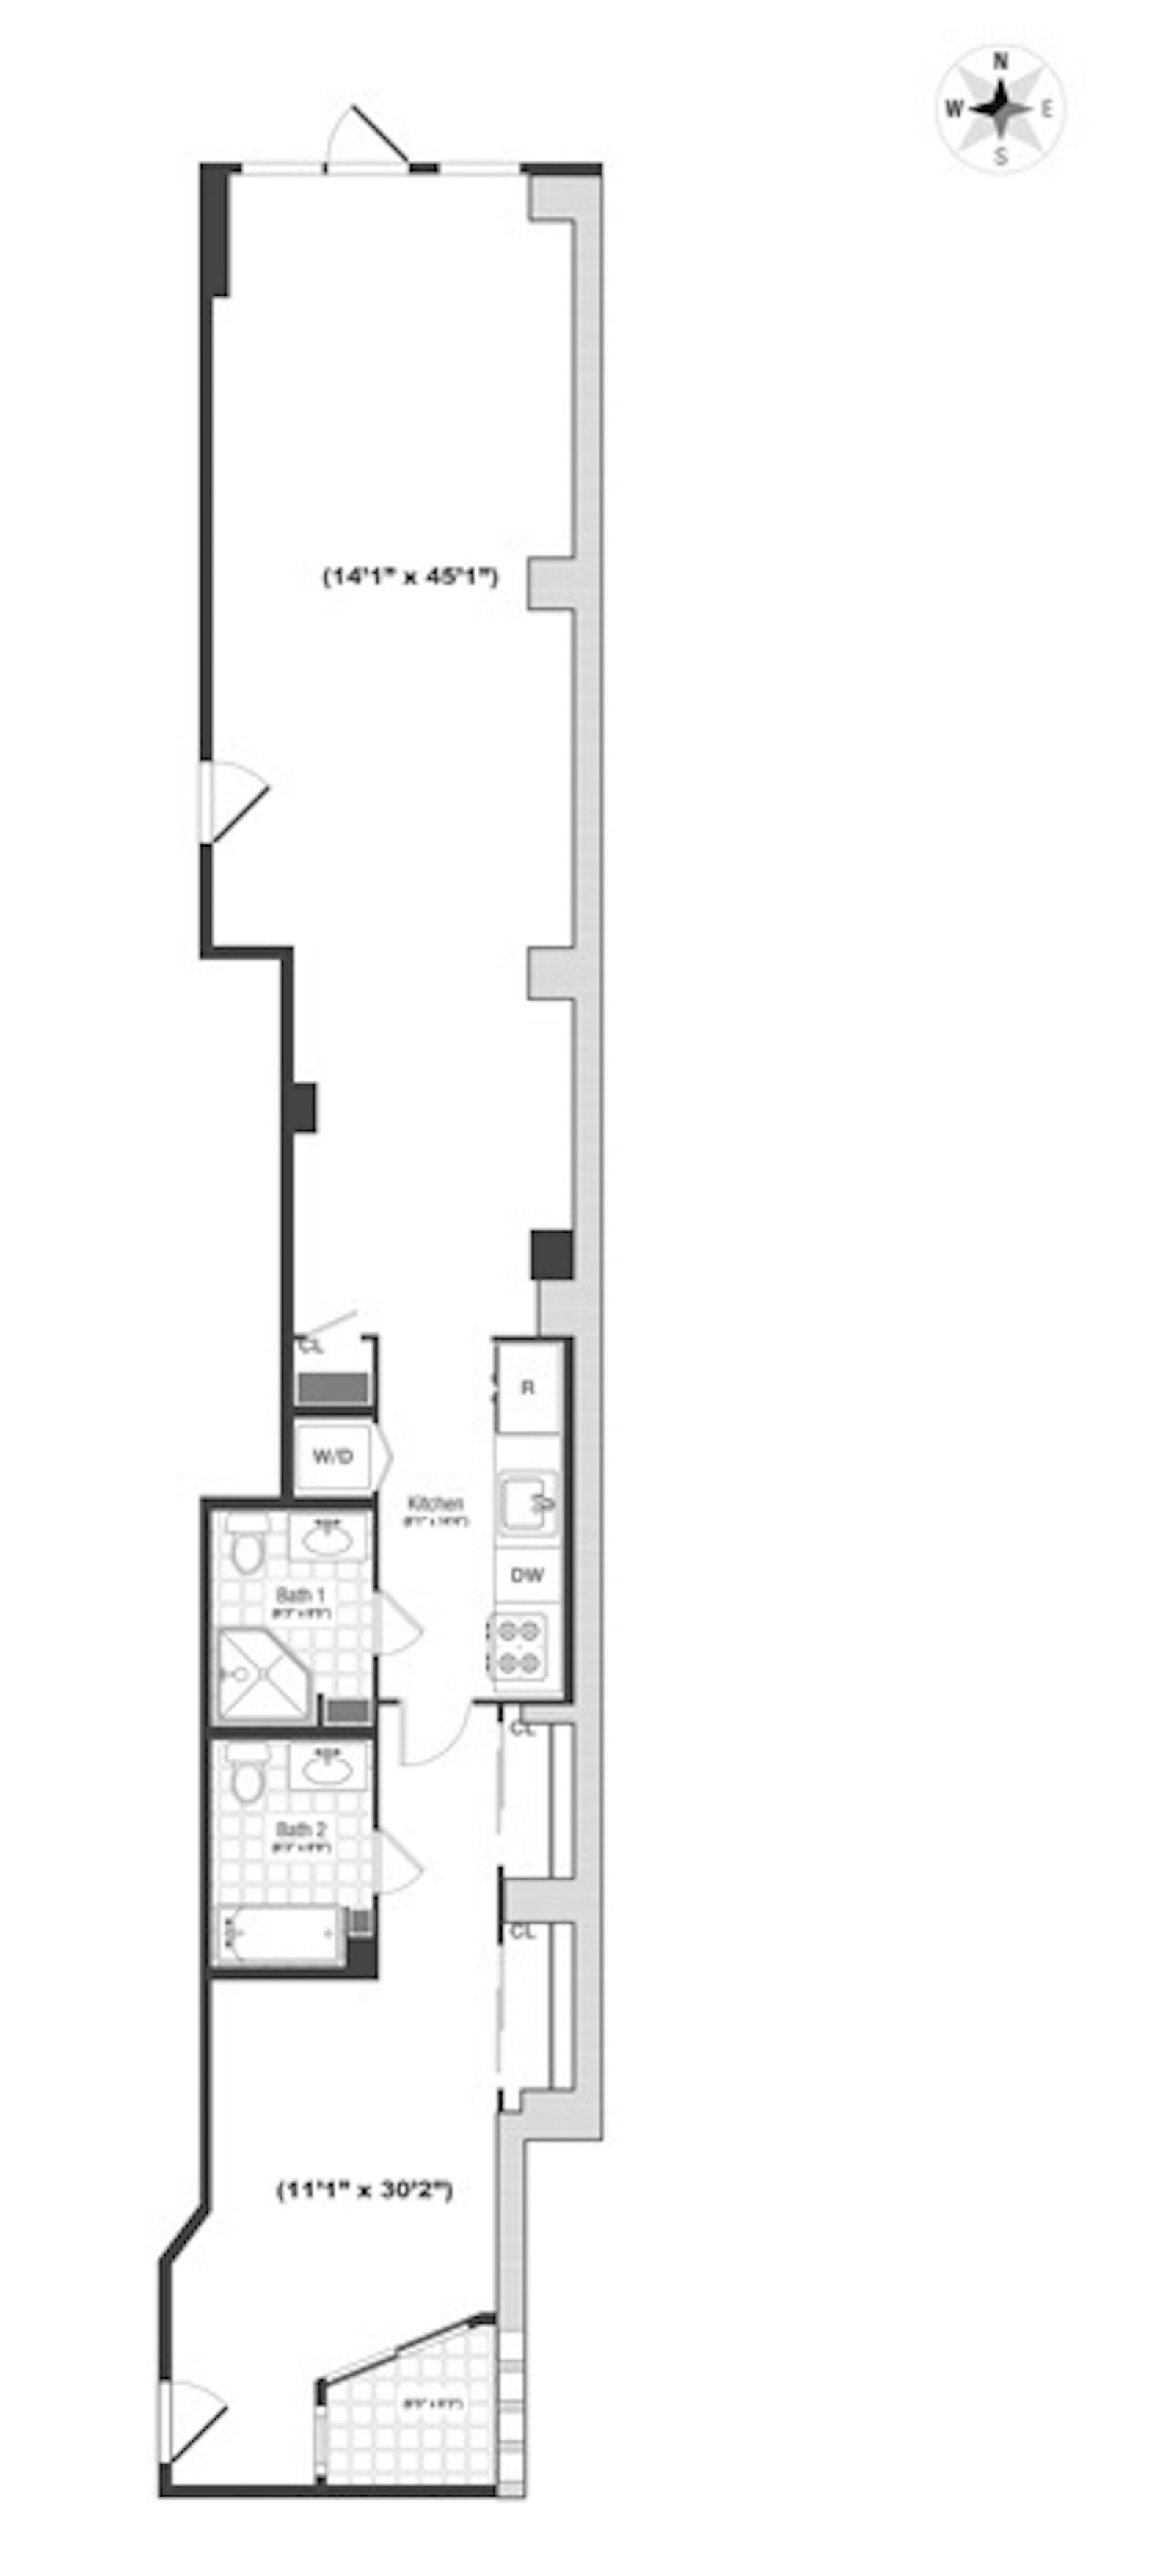 Floorplan for 36 Laight Street, 1B